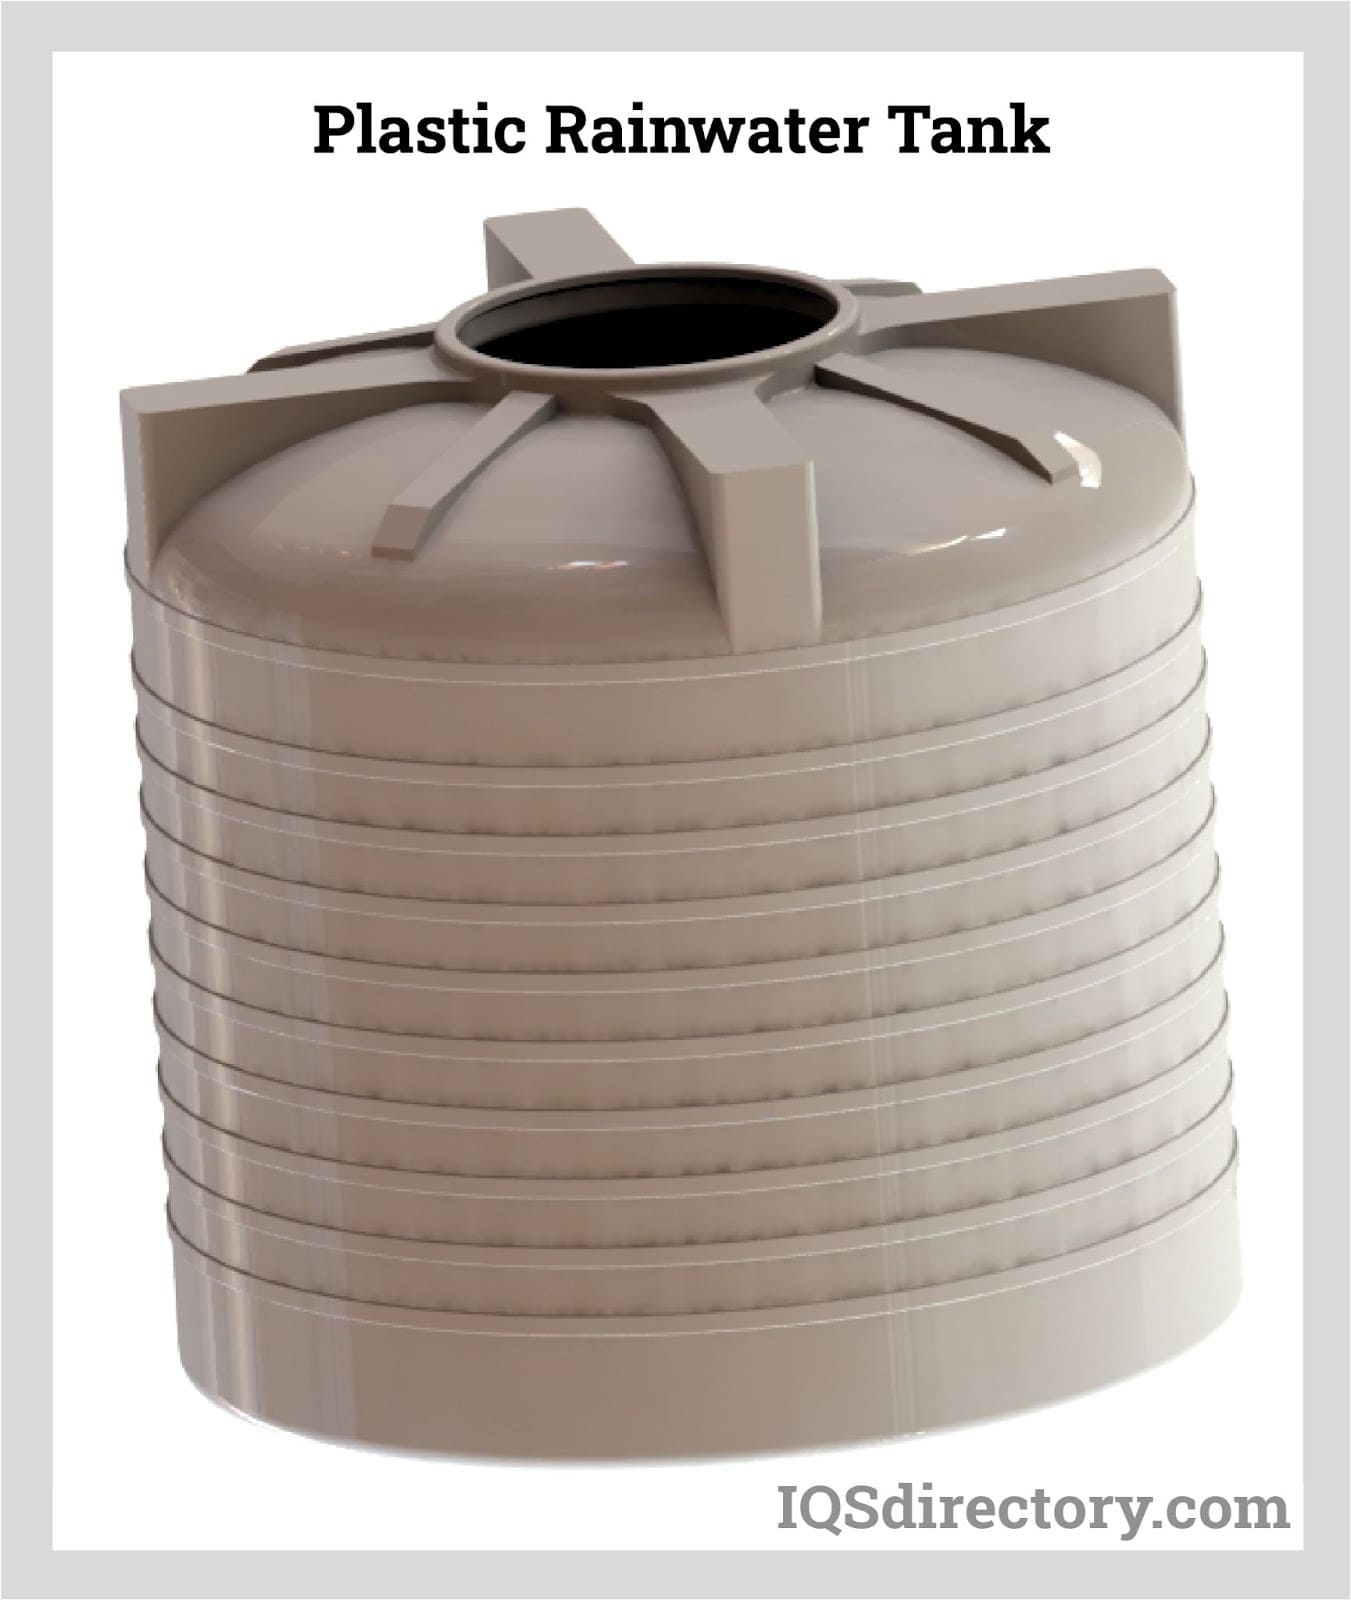 Plastic Rainwater Tank